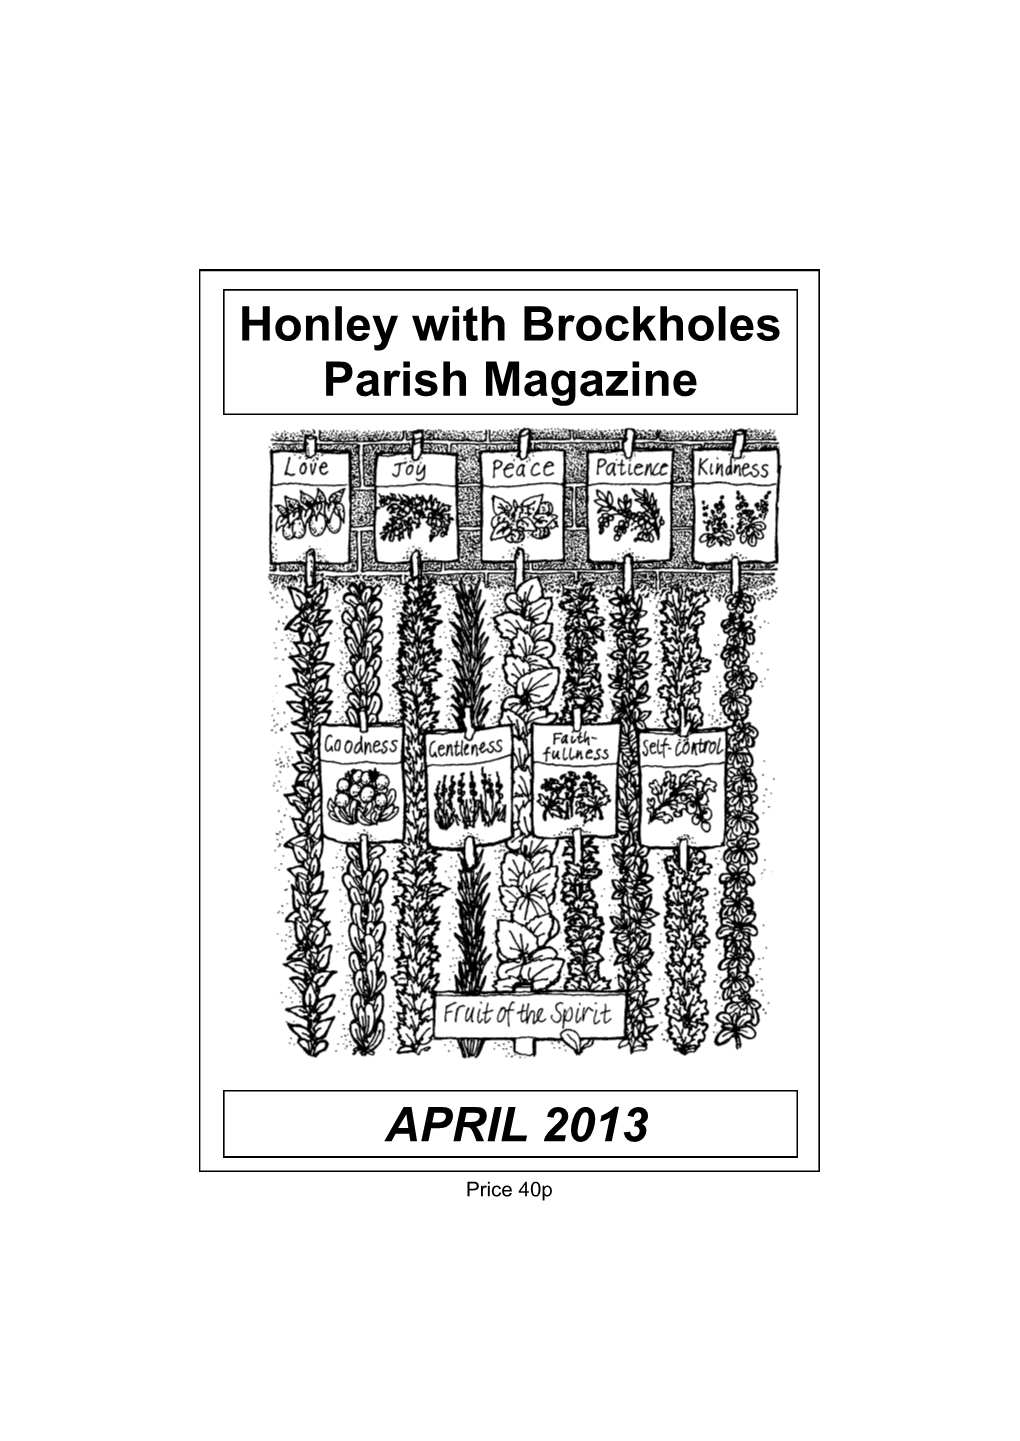 APRIL 2013 Honley with Brockholes Parish Magazine